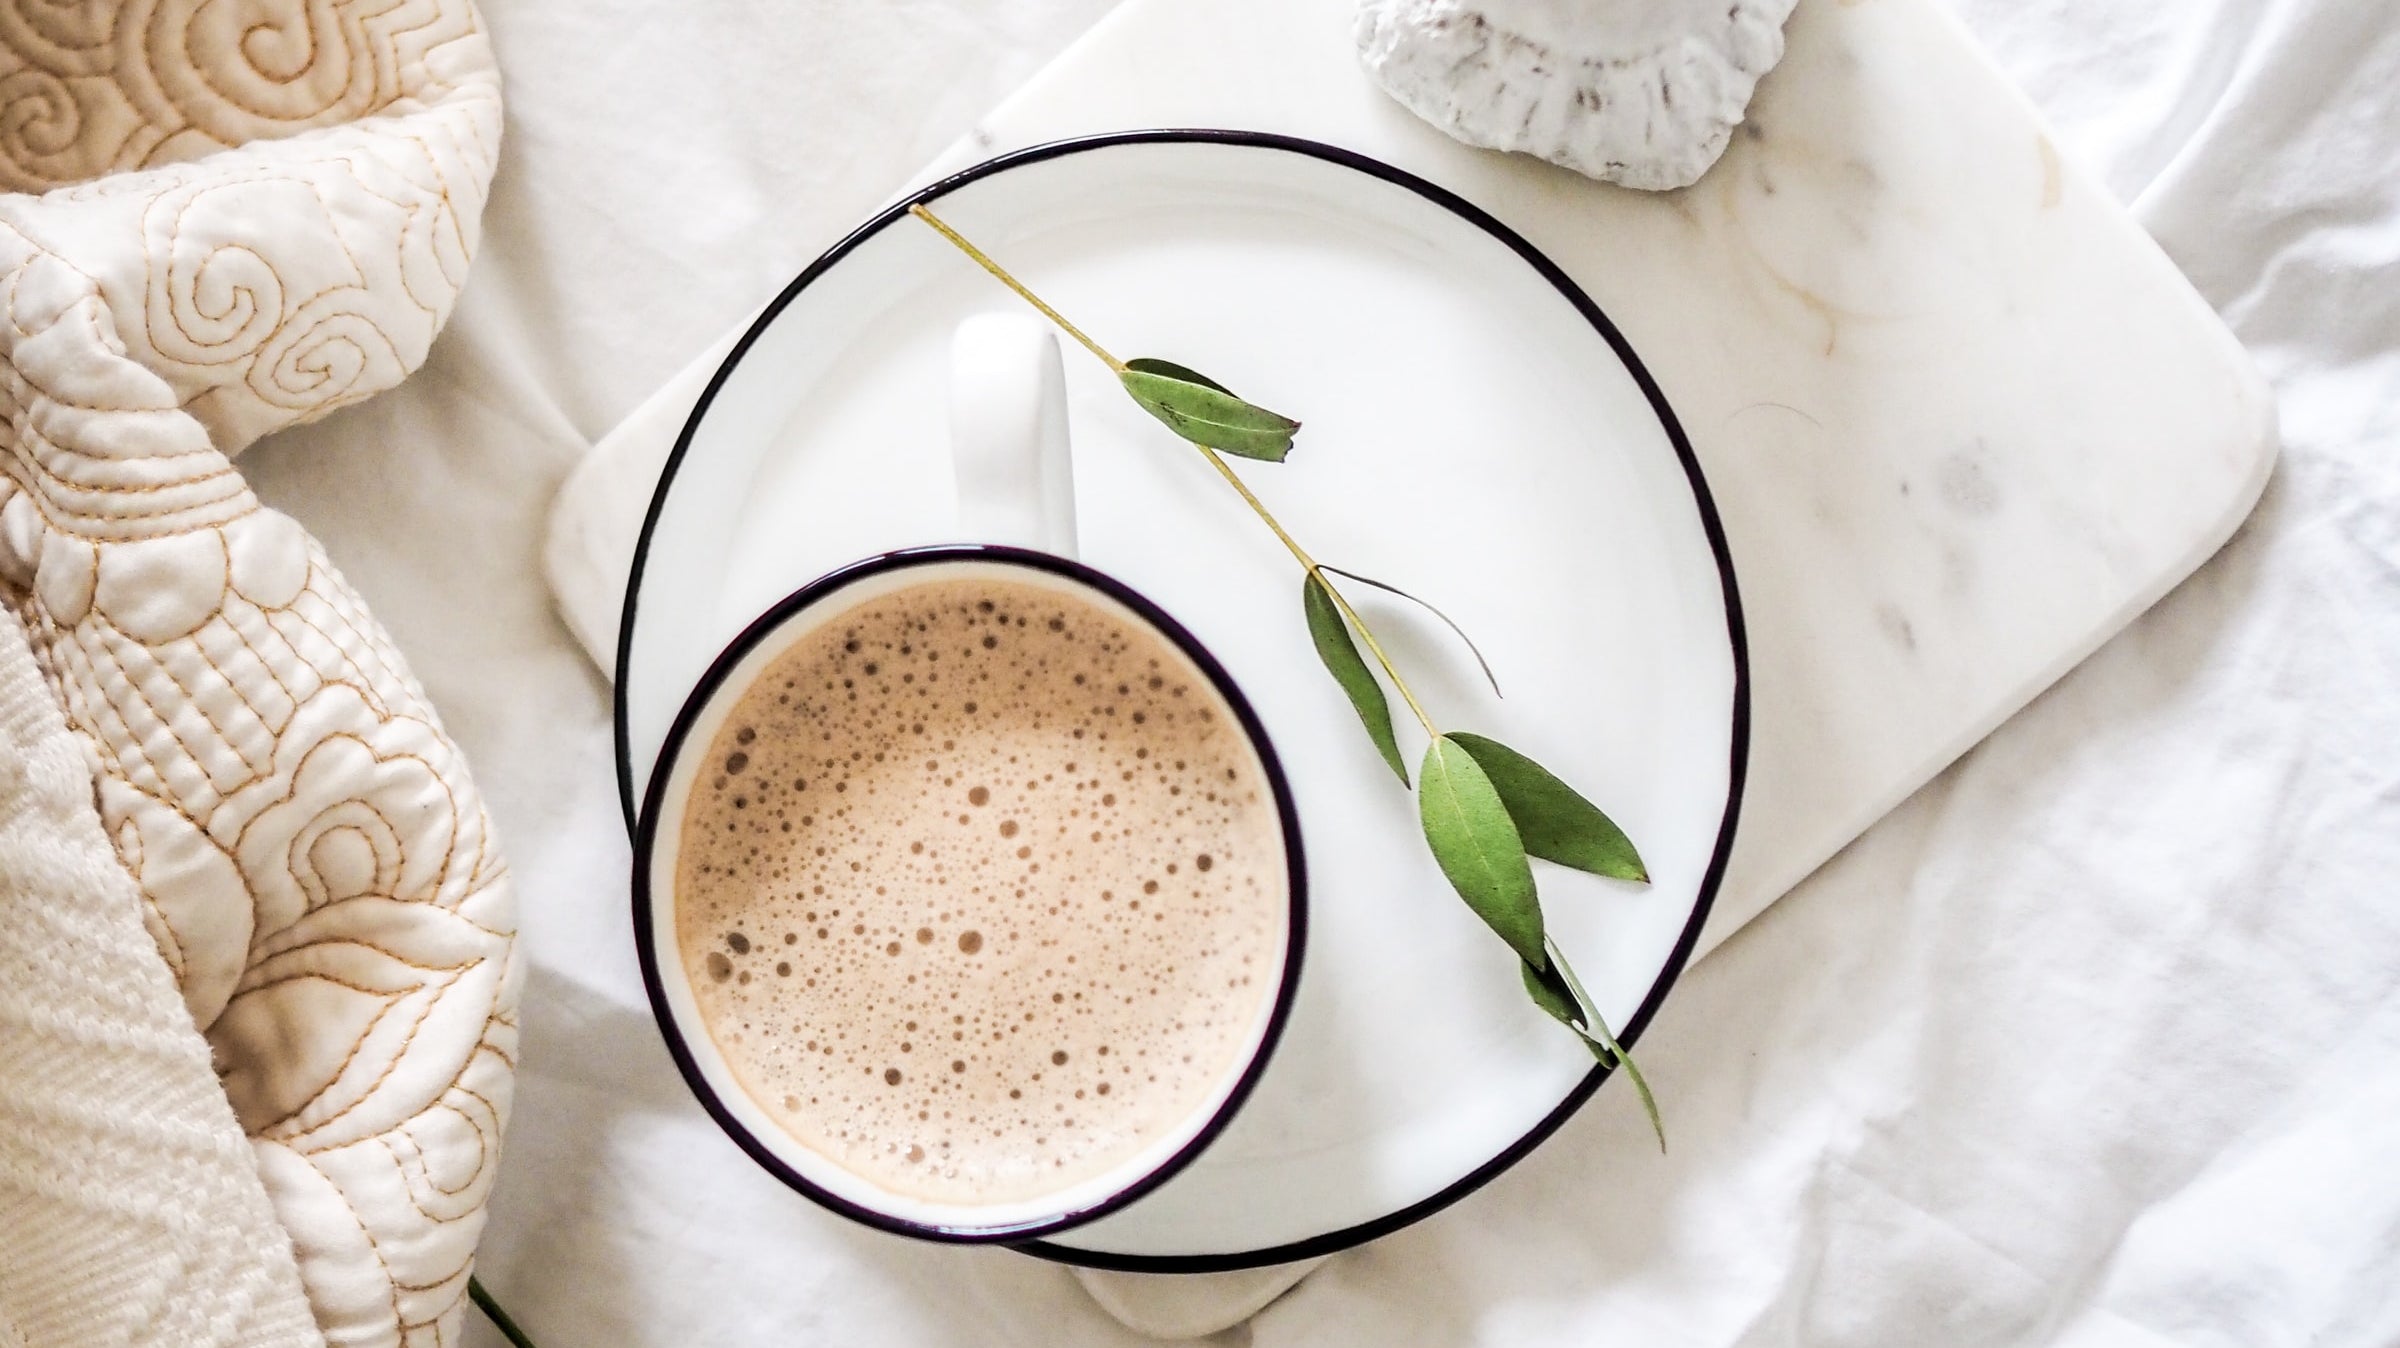 Taheebo “NAD+ Boosting” Tea Recipe